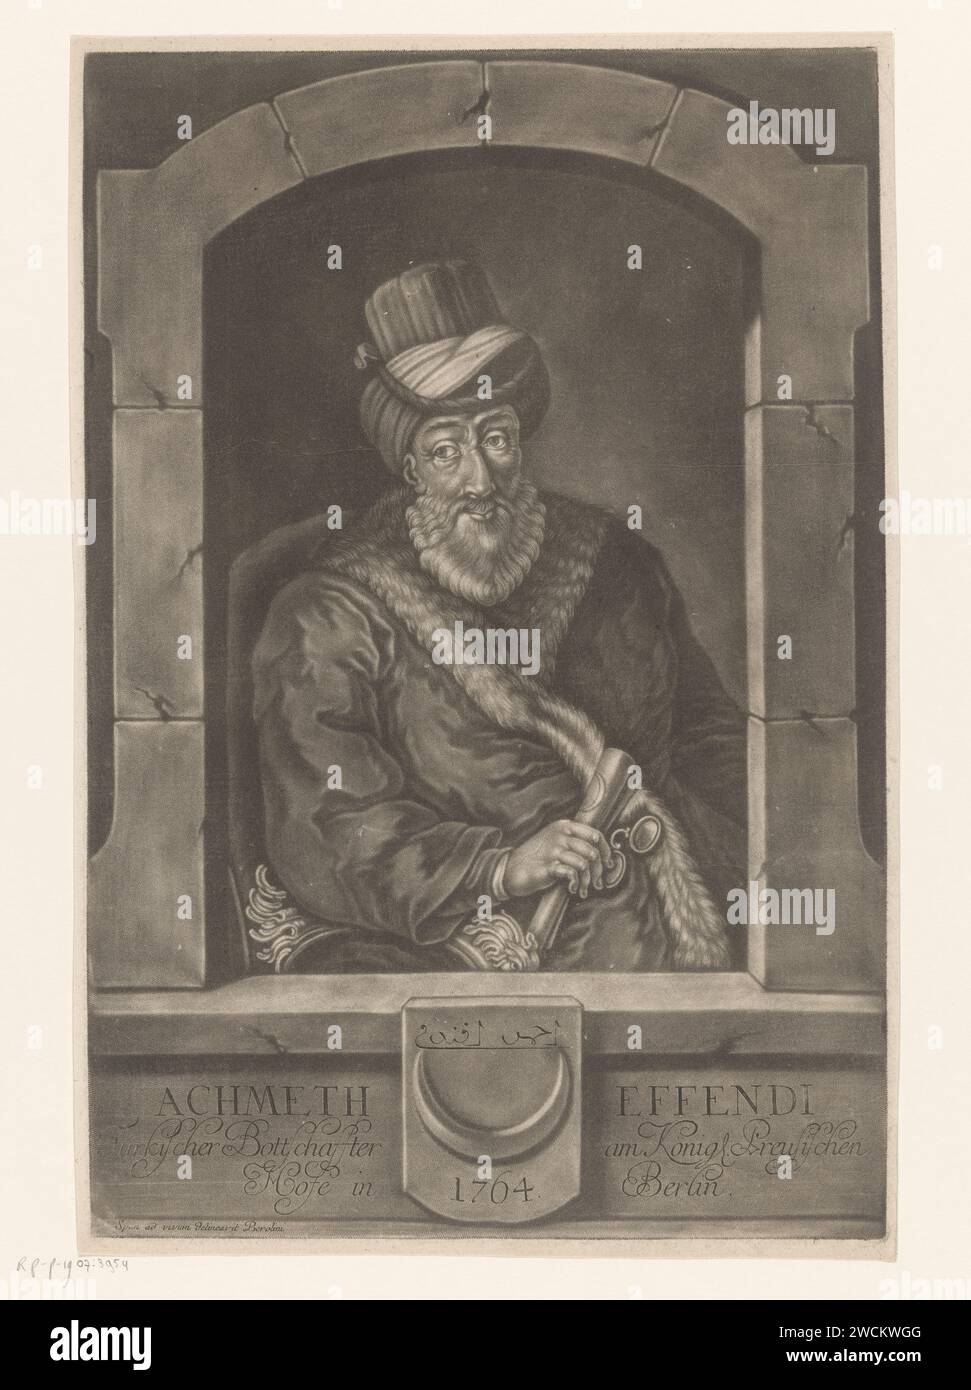 Portret van Ahmed Resmî Efendi, Johann Christian Leopold, after Joseph Ignaz Span, 1764 print  Berlin paper  historical persons Stock Photo